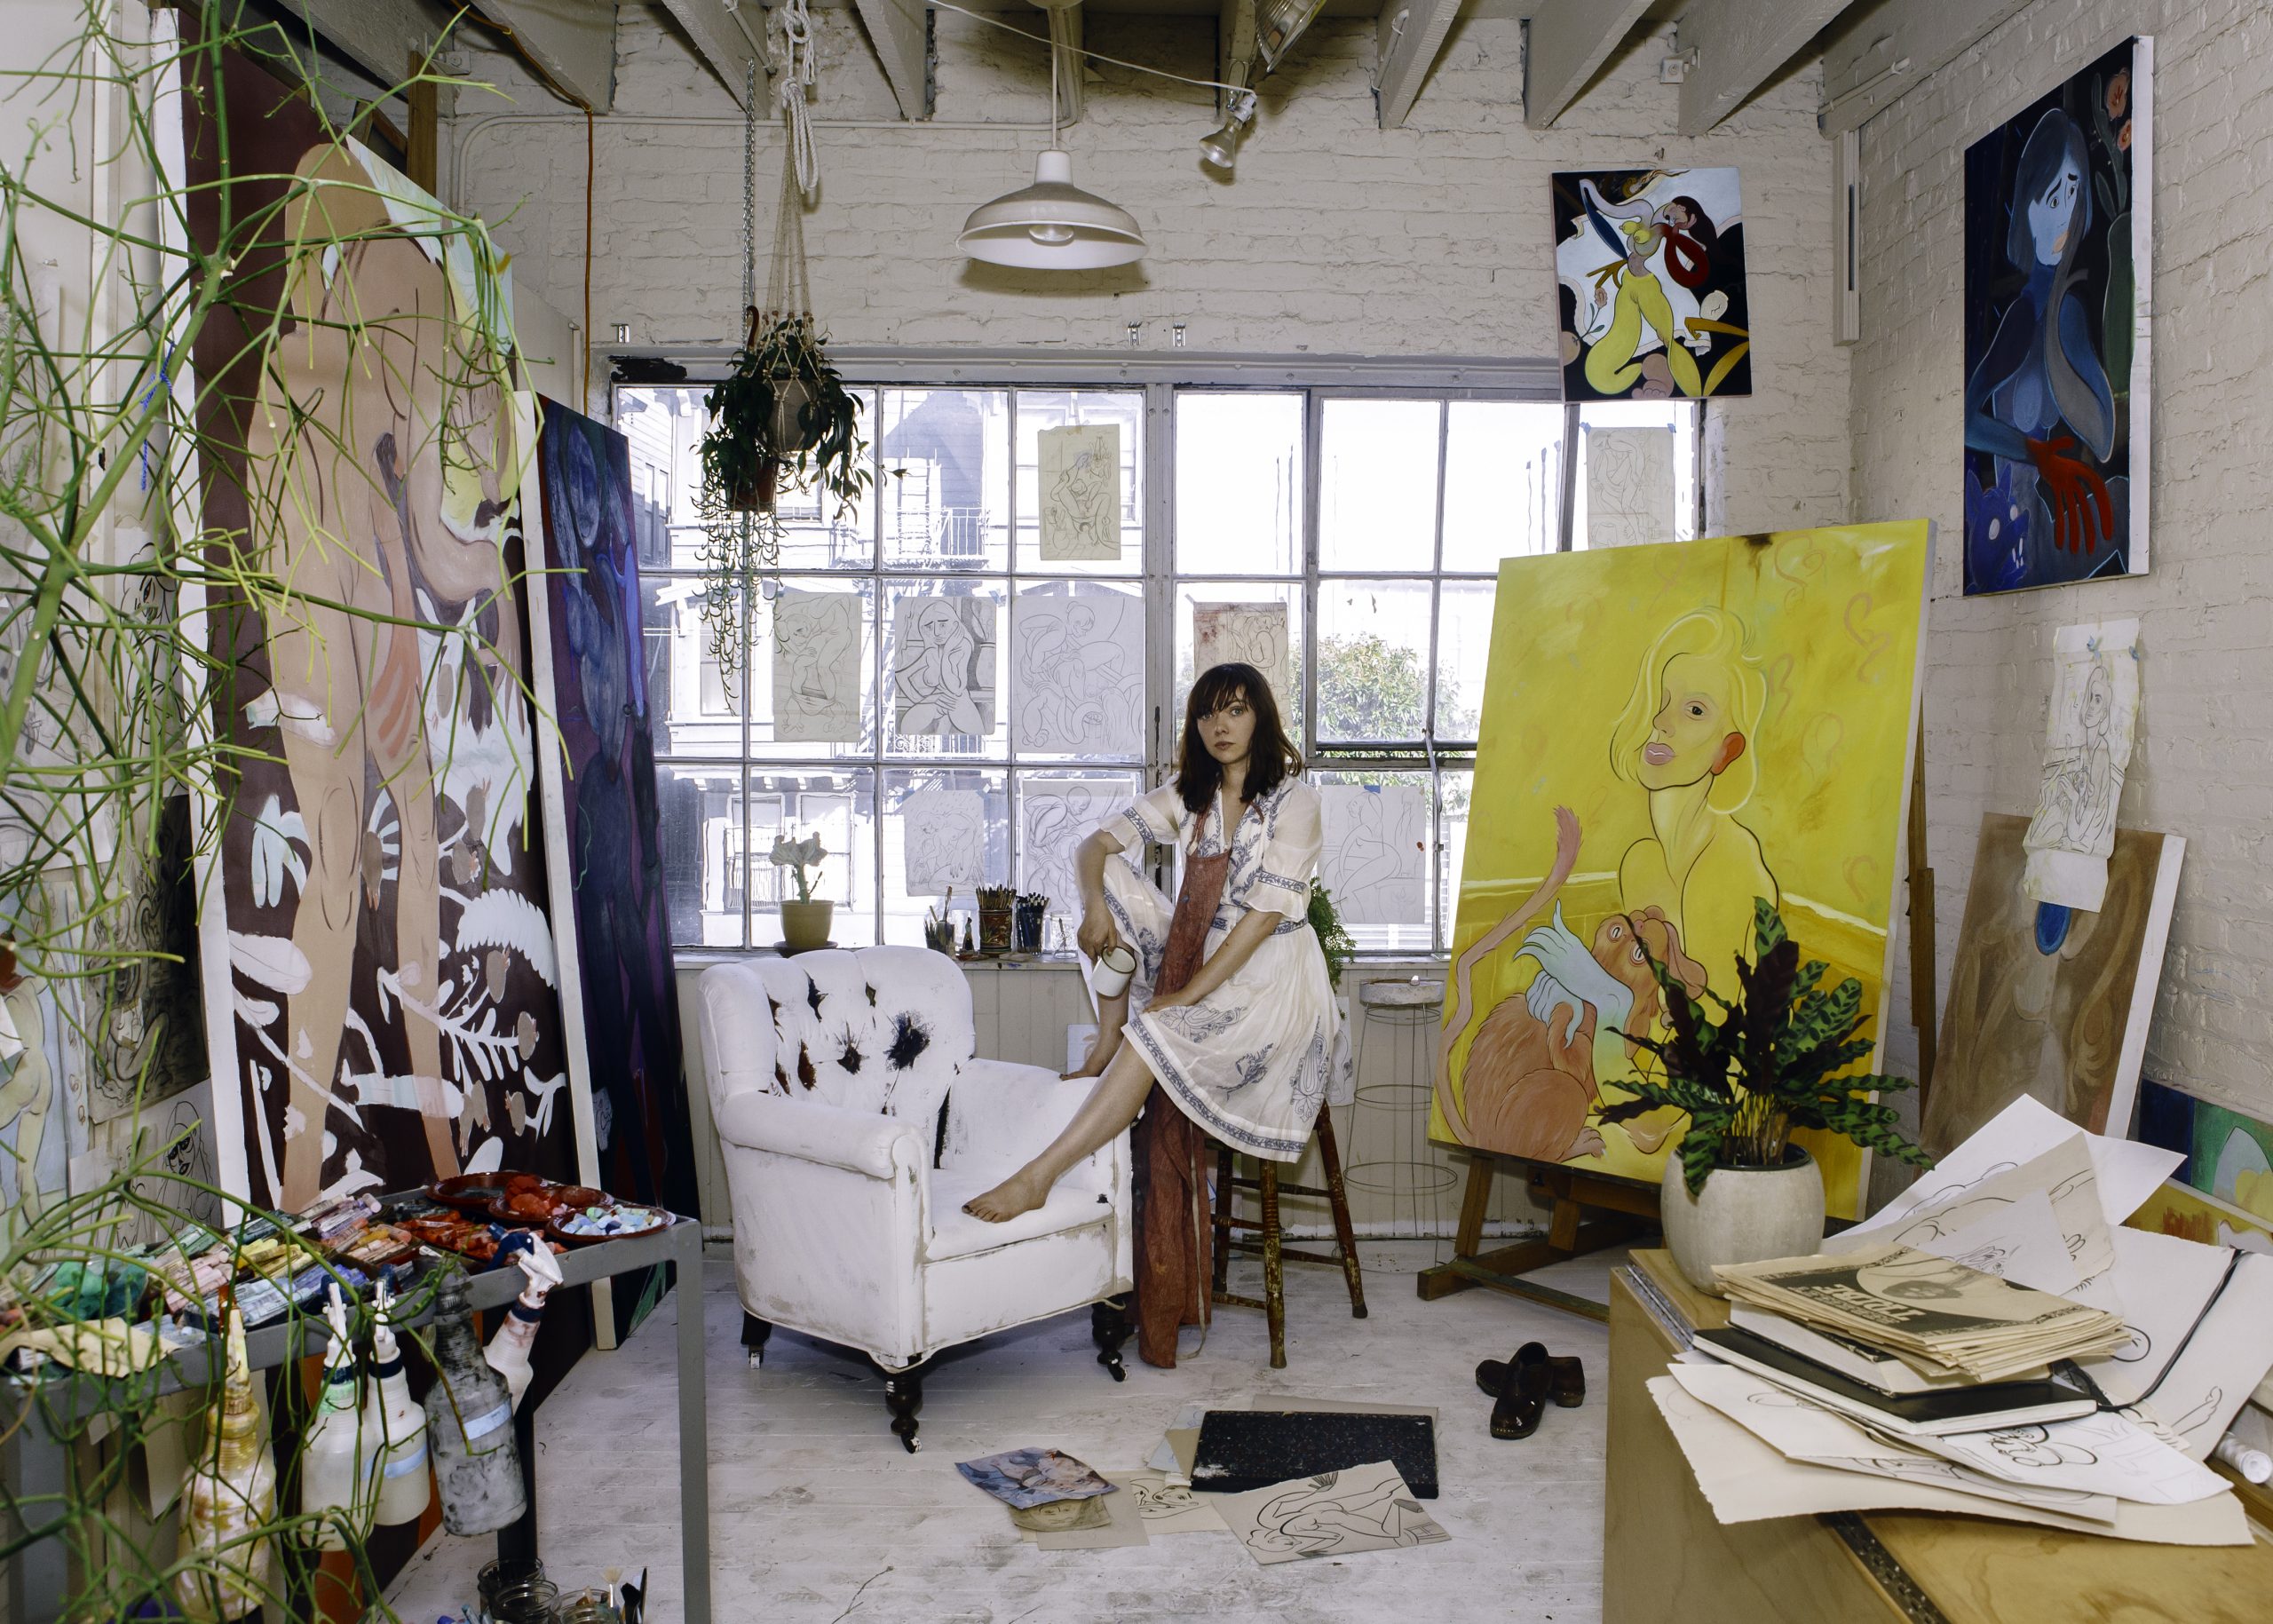 Koak in her studio with her paintings